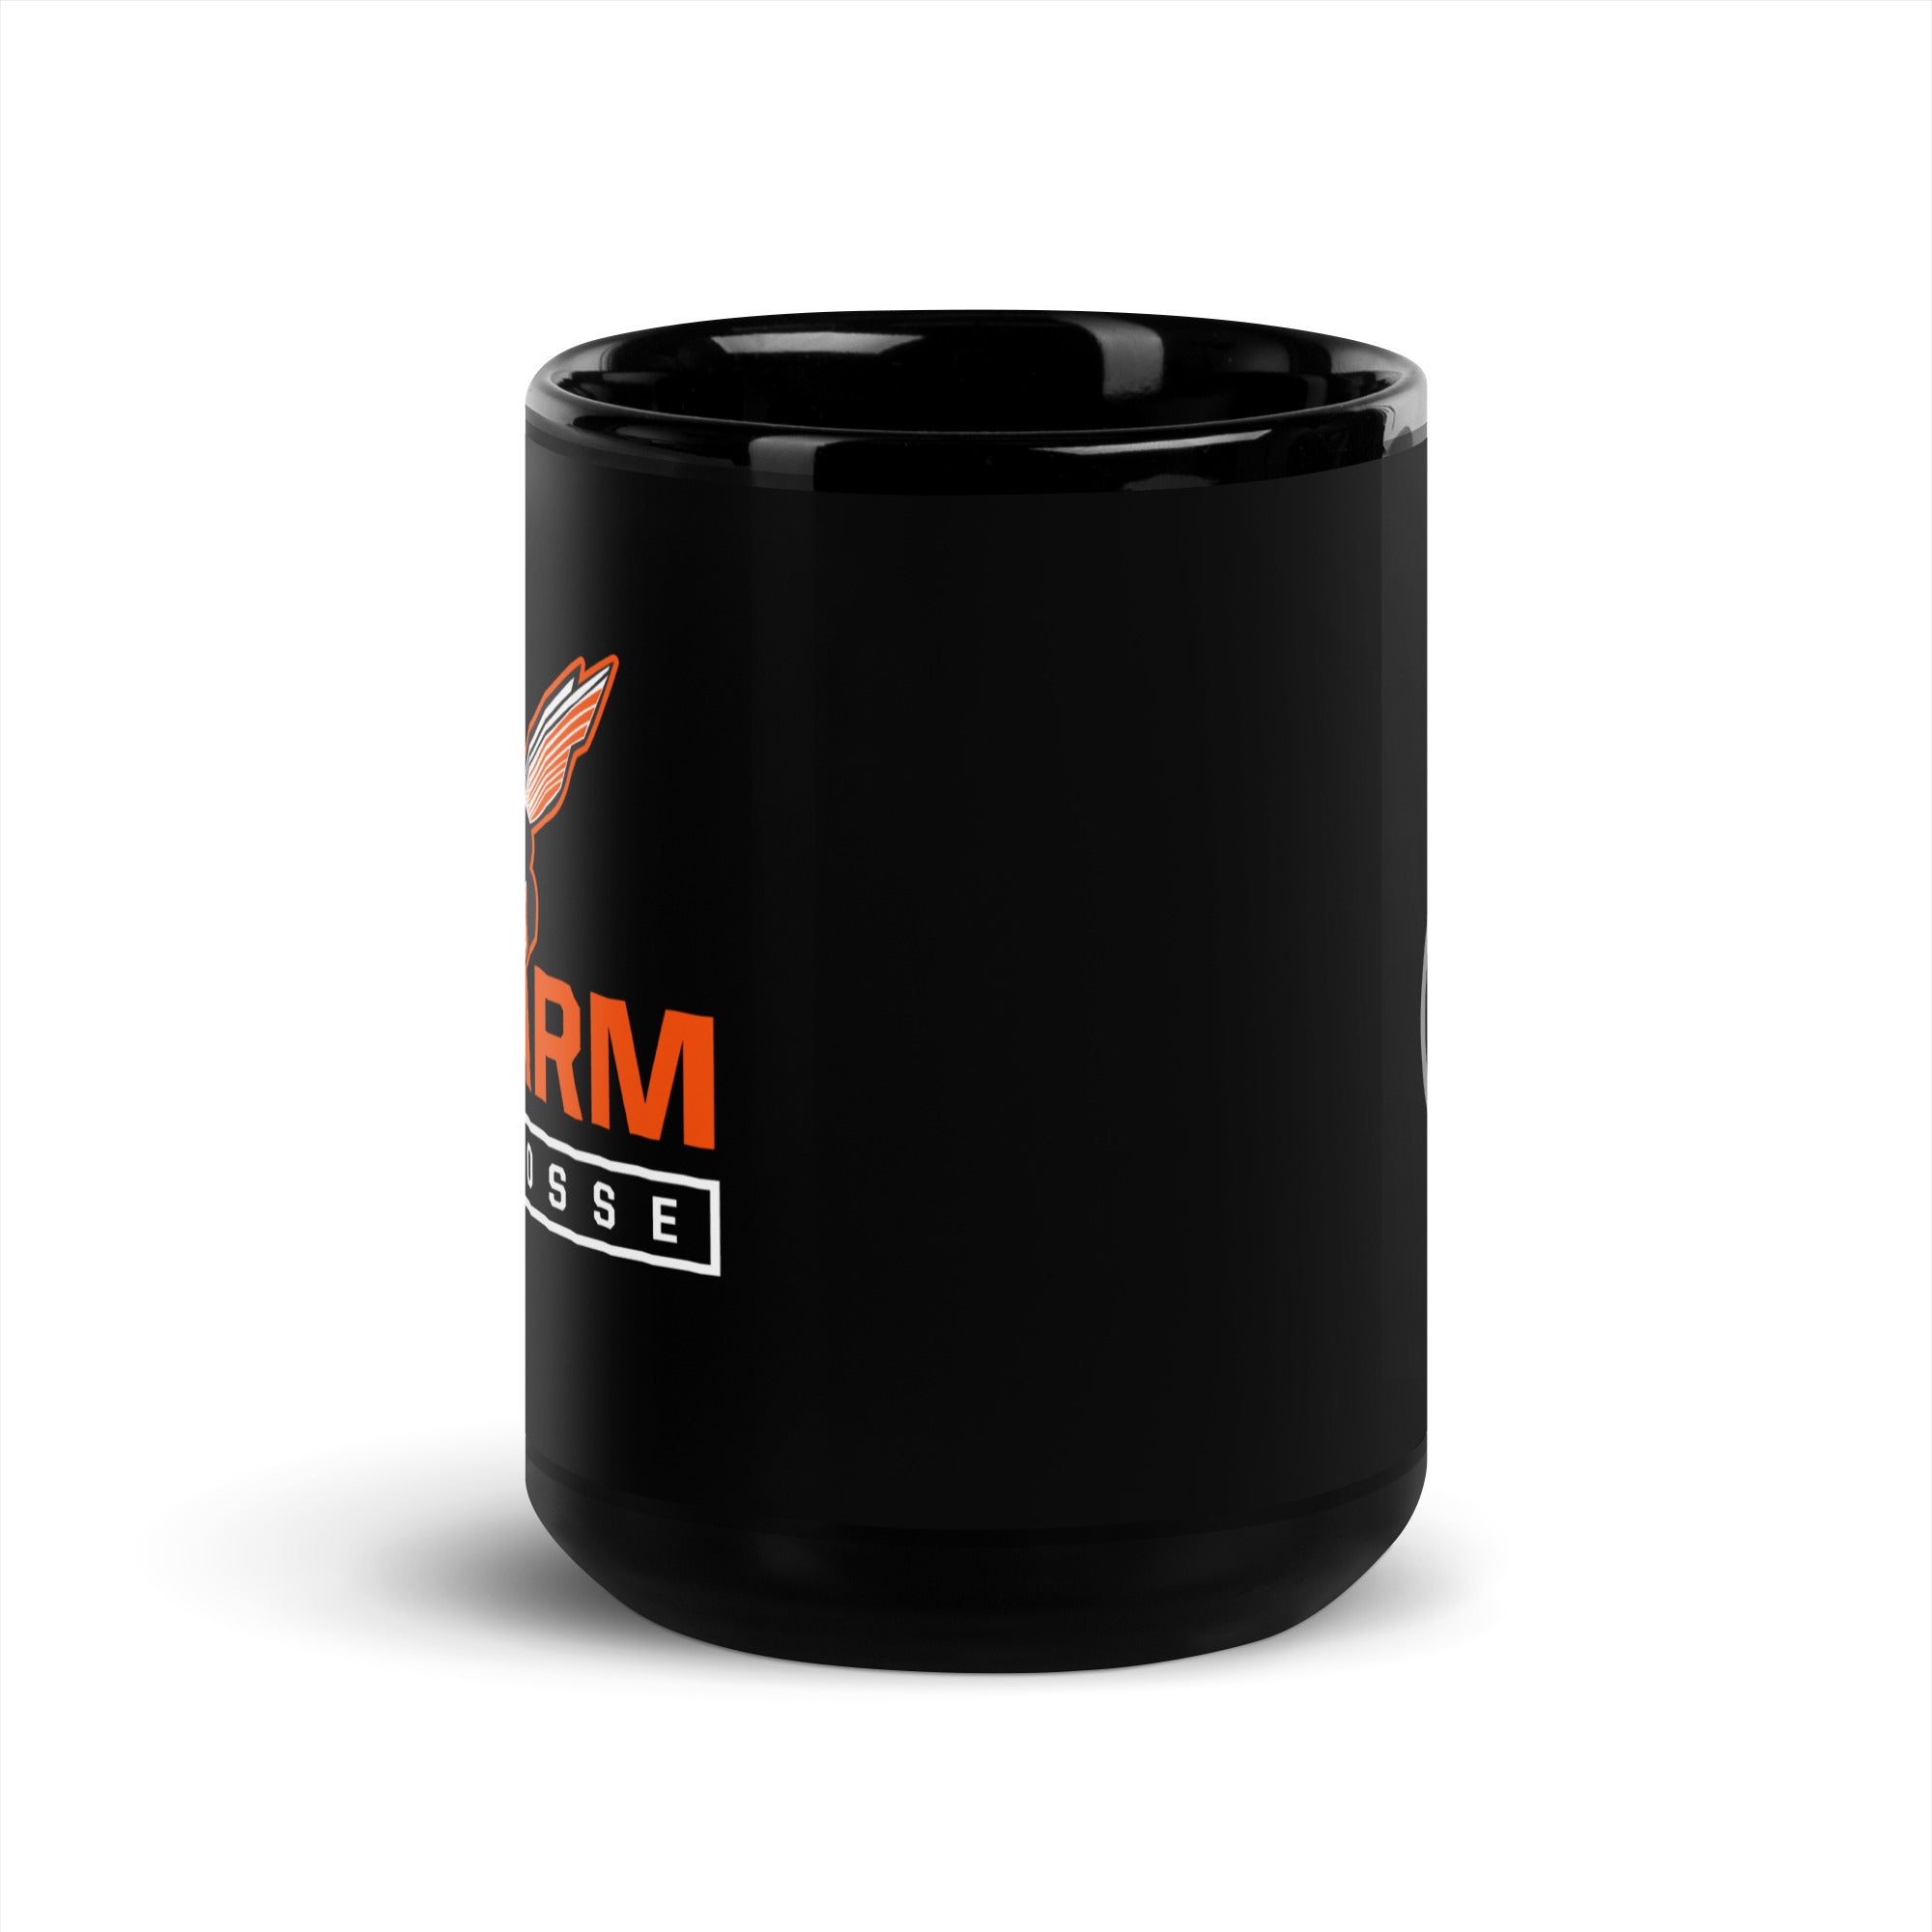 Swarm Black Glossy Mug